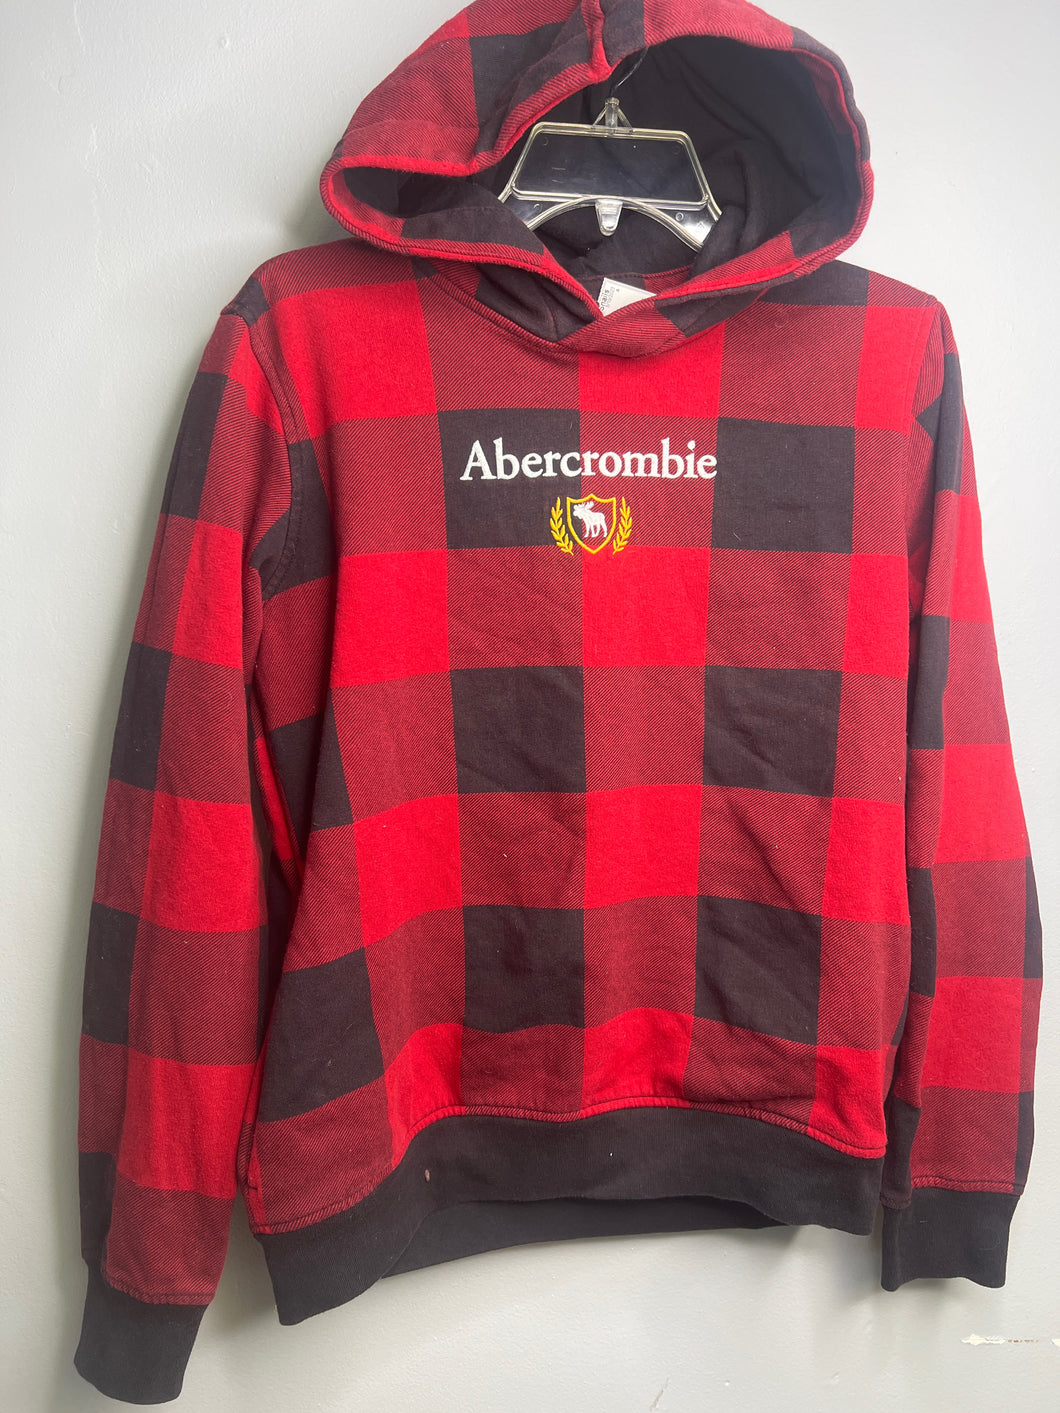 Boys size 15/16 Abercrombie hoodie